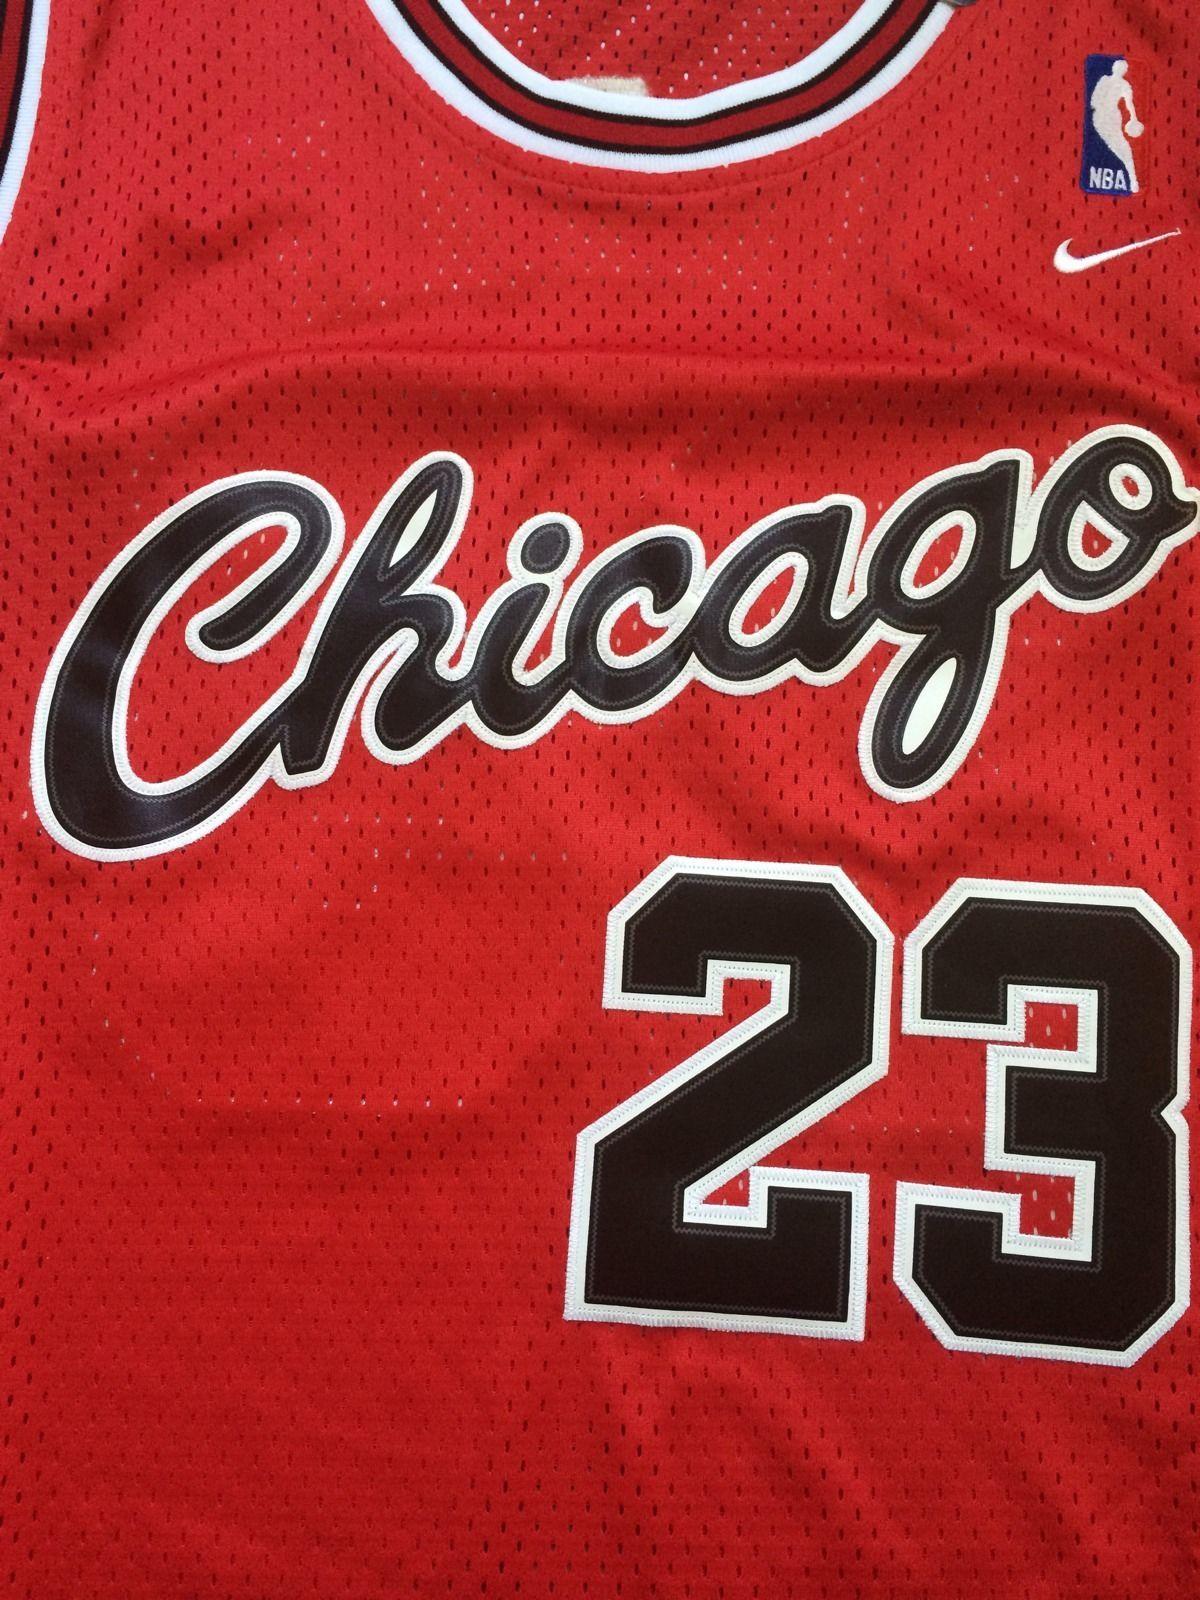 chicago cursive jersey